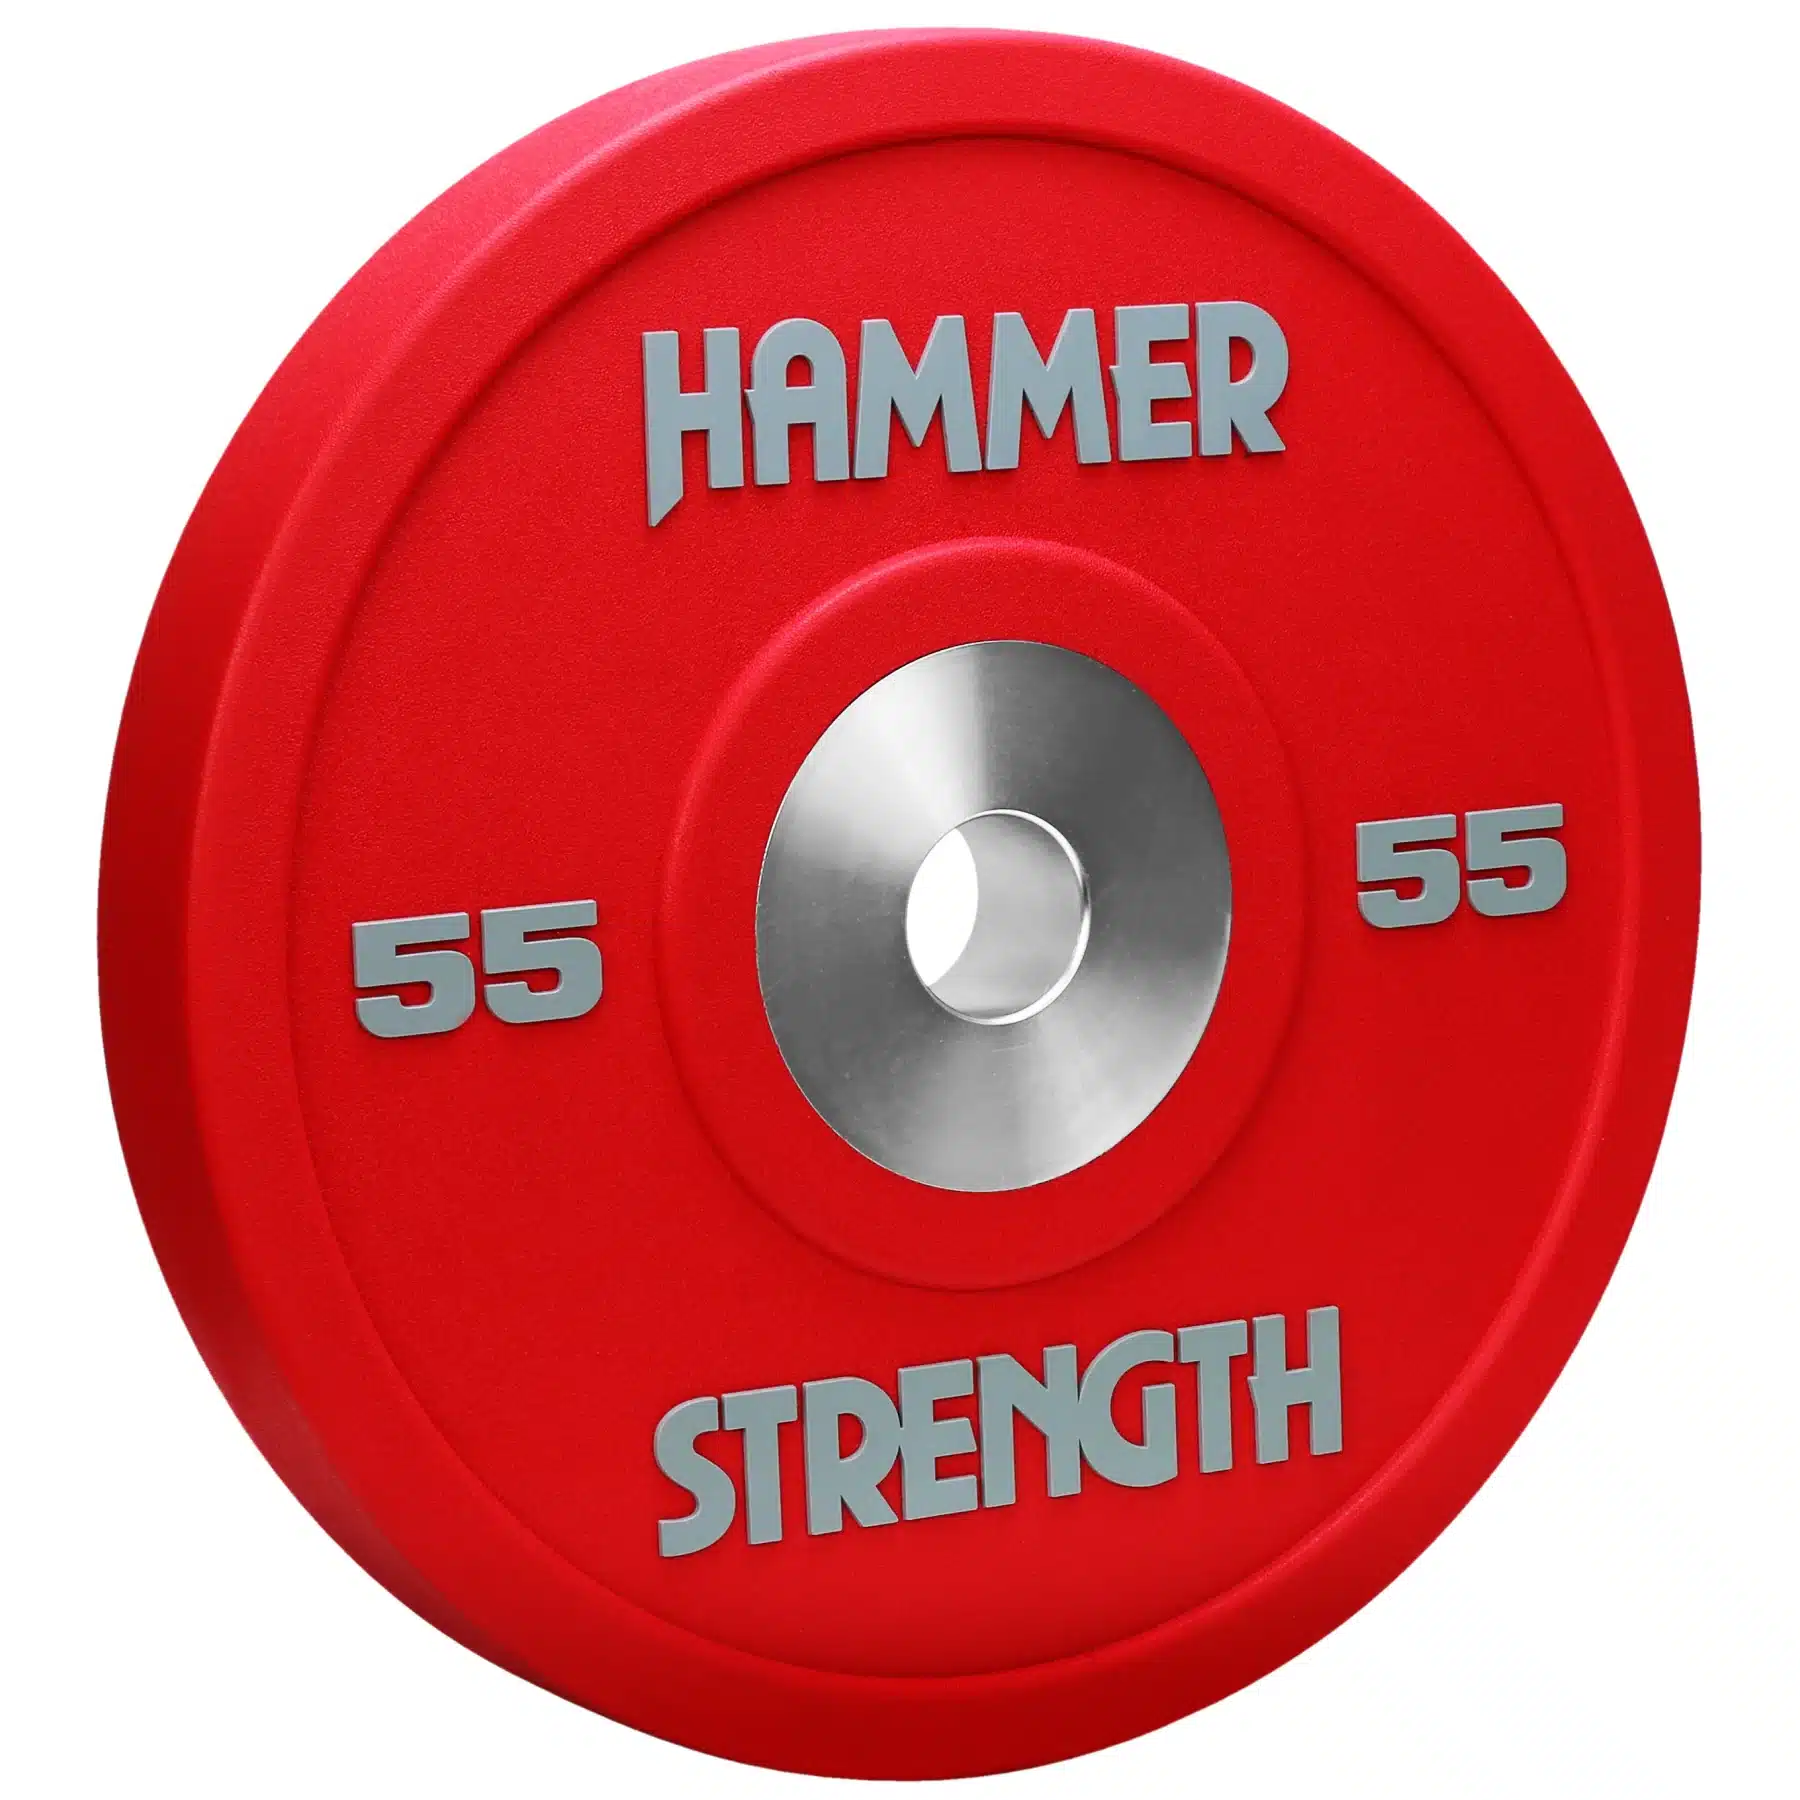 Hammer Strength Urethane Bumper Plates